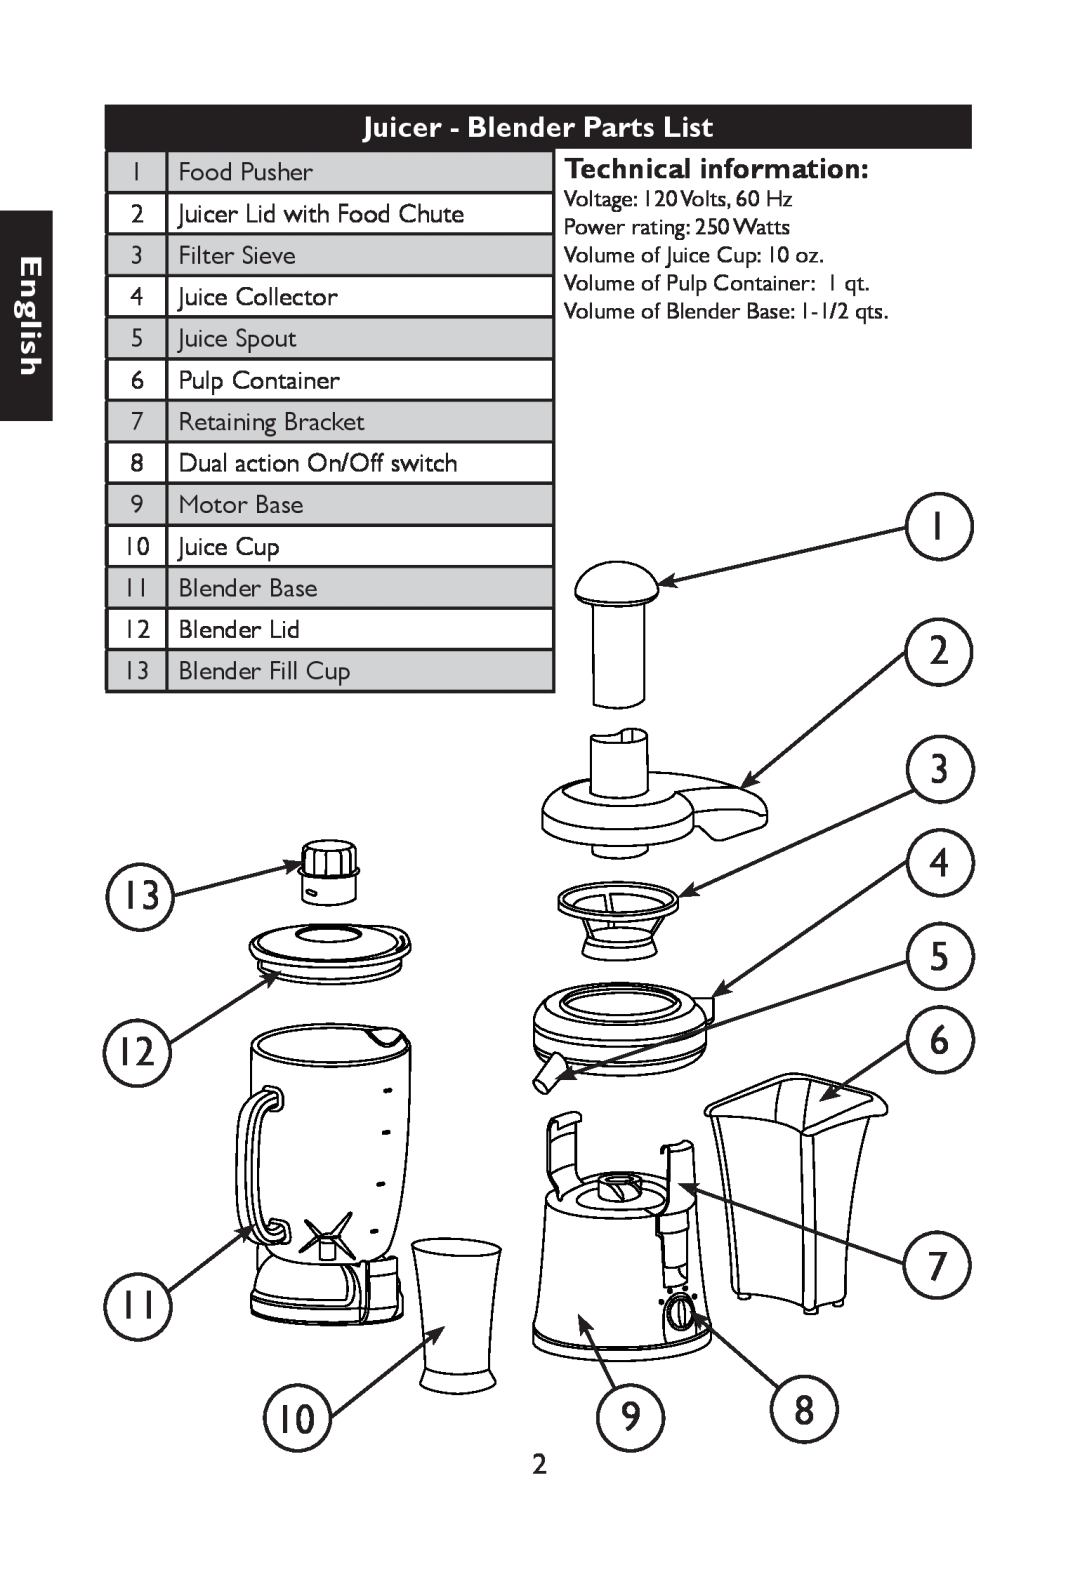 Nesco JB-50 manual English, Juicer - Blender Parts List, Technical information 